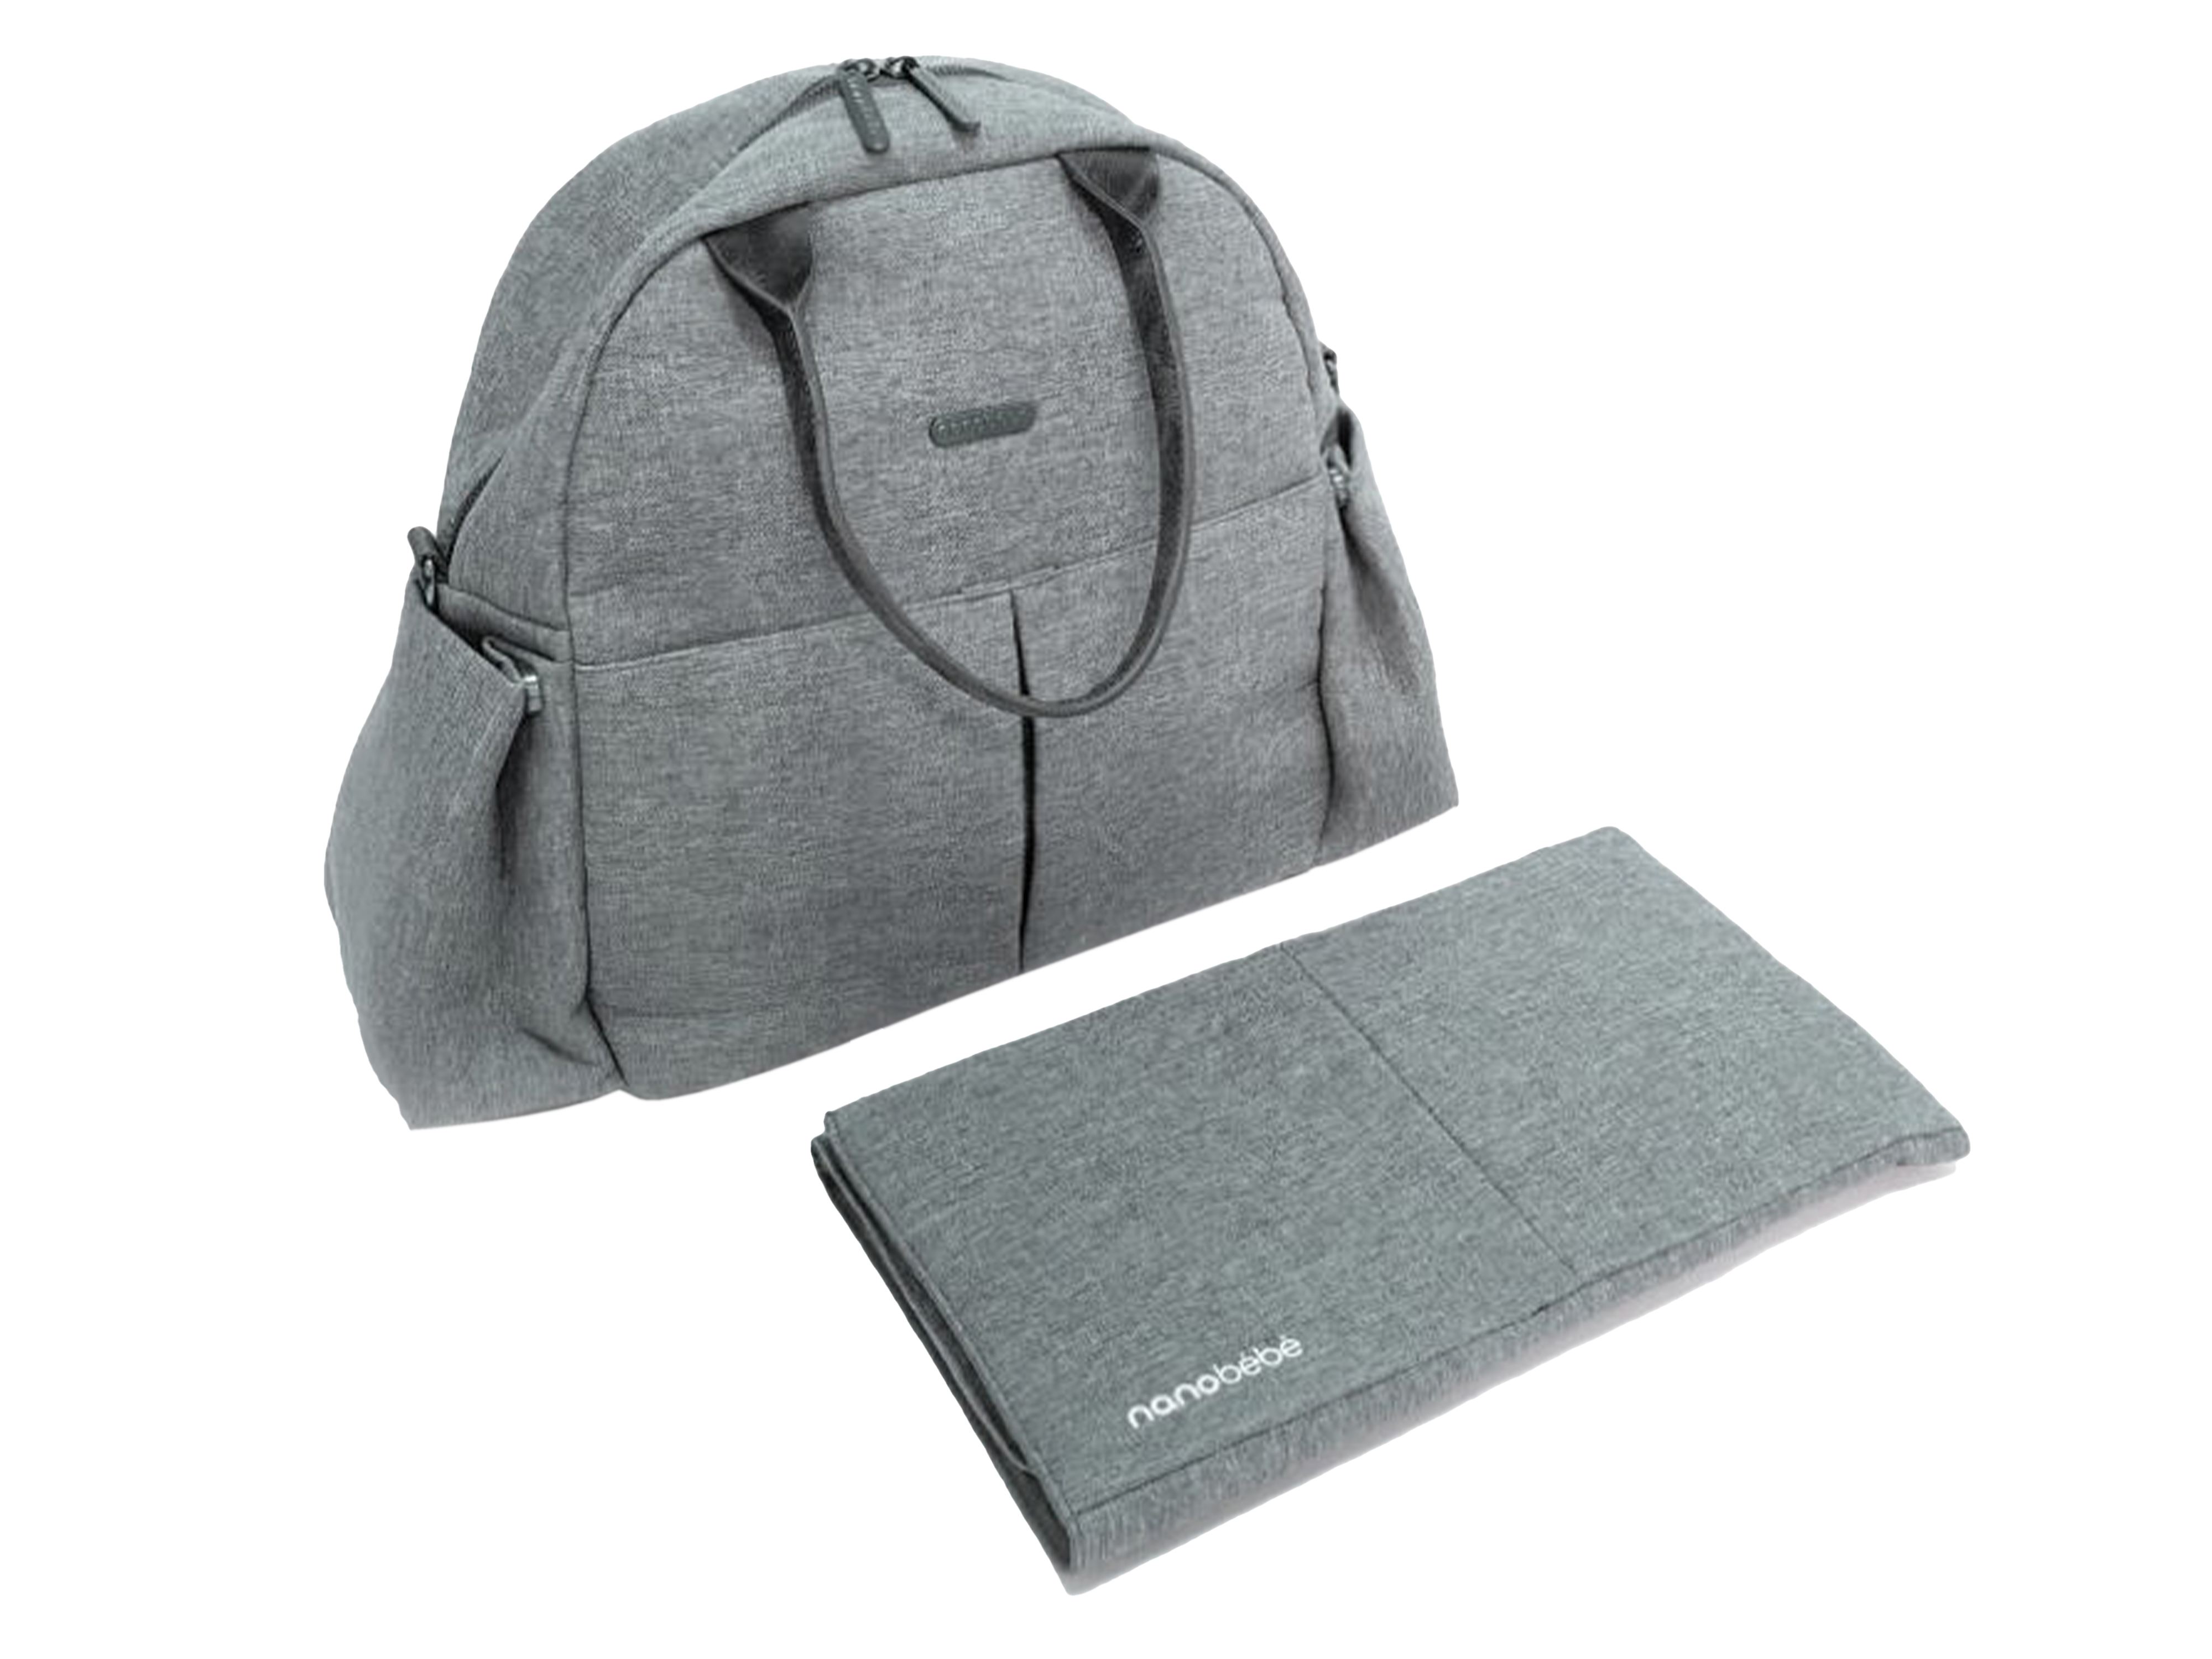 Nanobébé Backpack Diaper Bag, Grå, 1 stk.